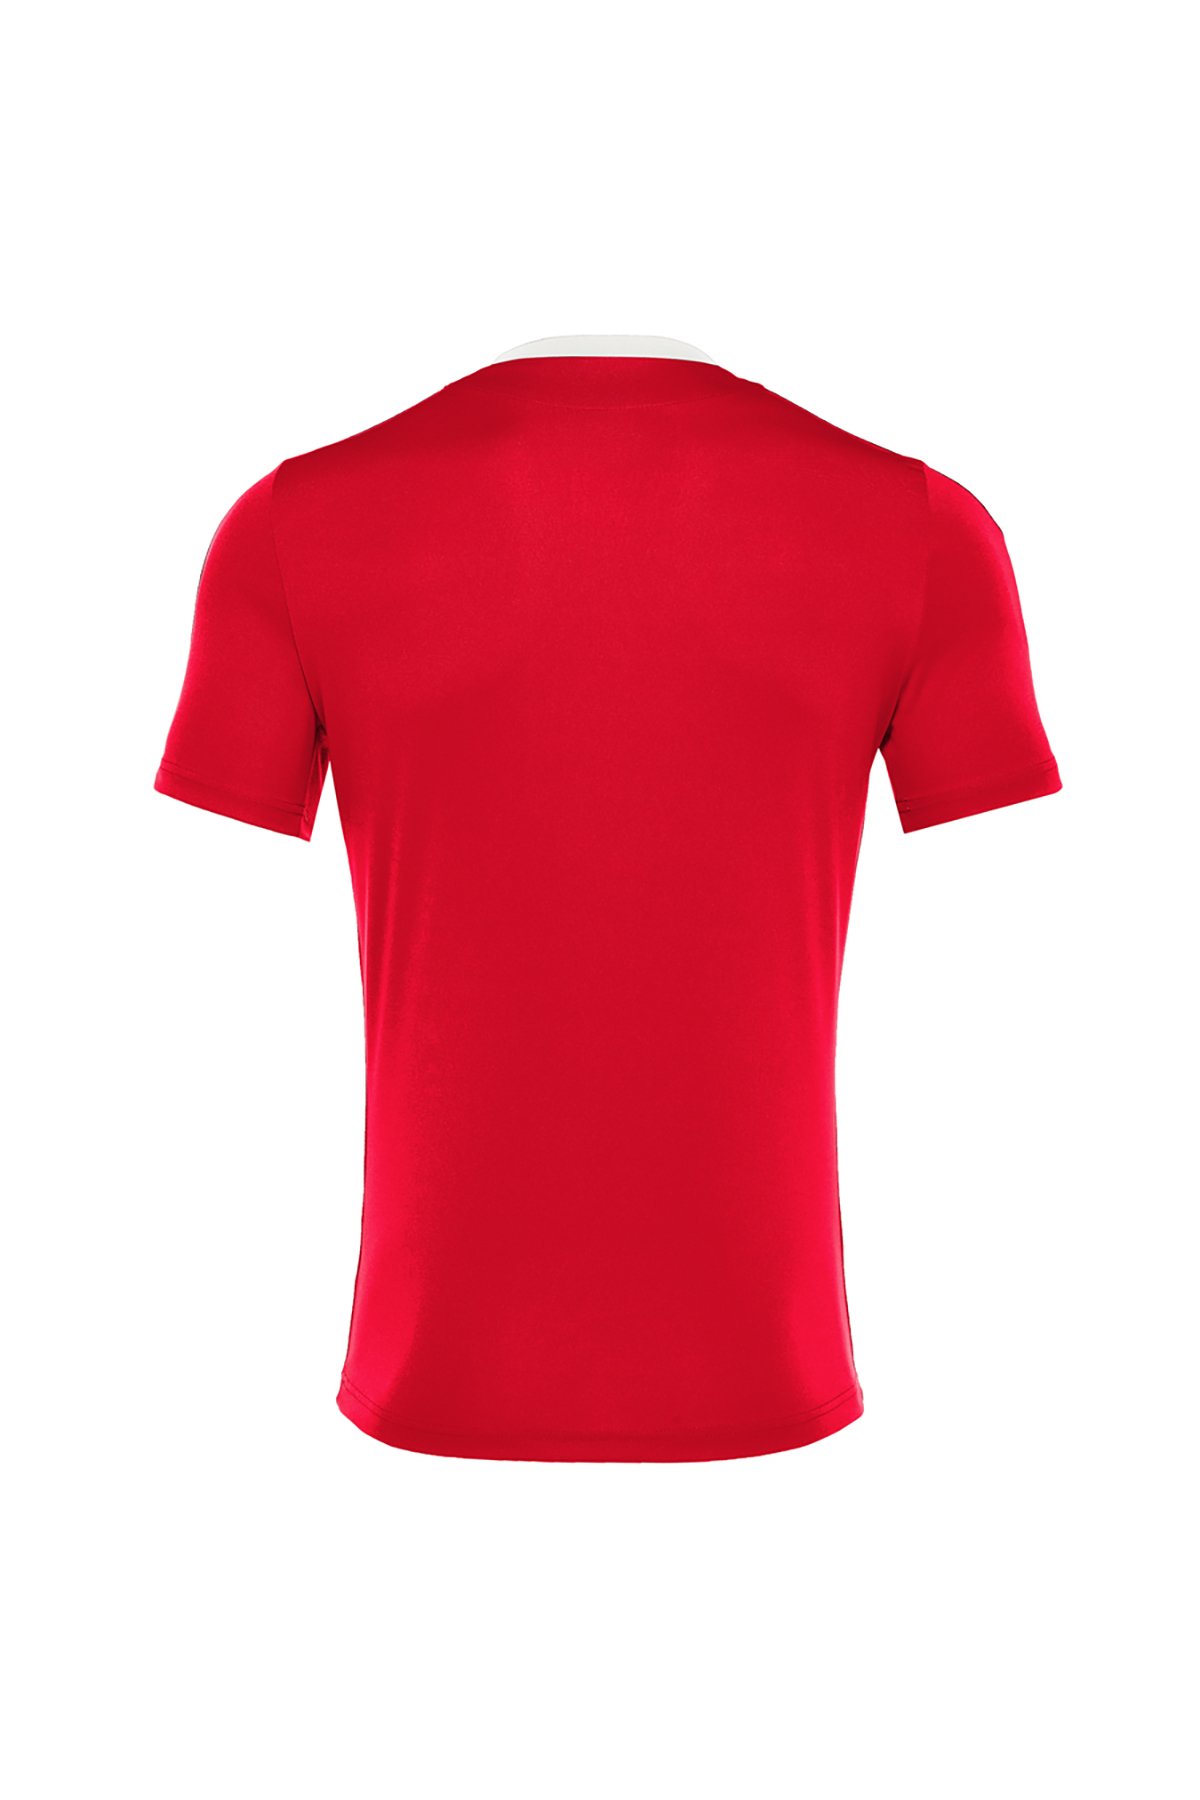 Macron Kırmızı Erkek T-Shirt 50570201 - 3